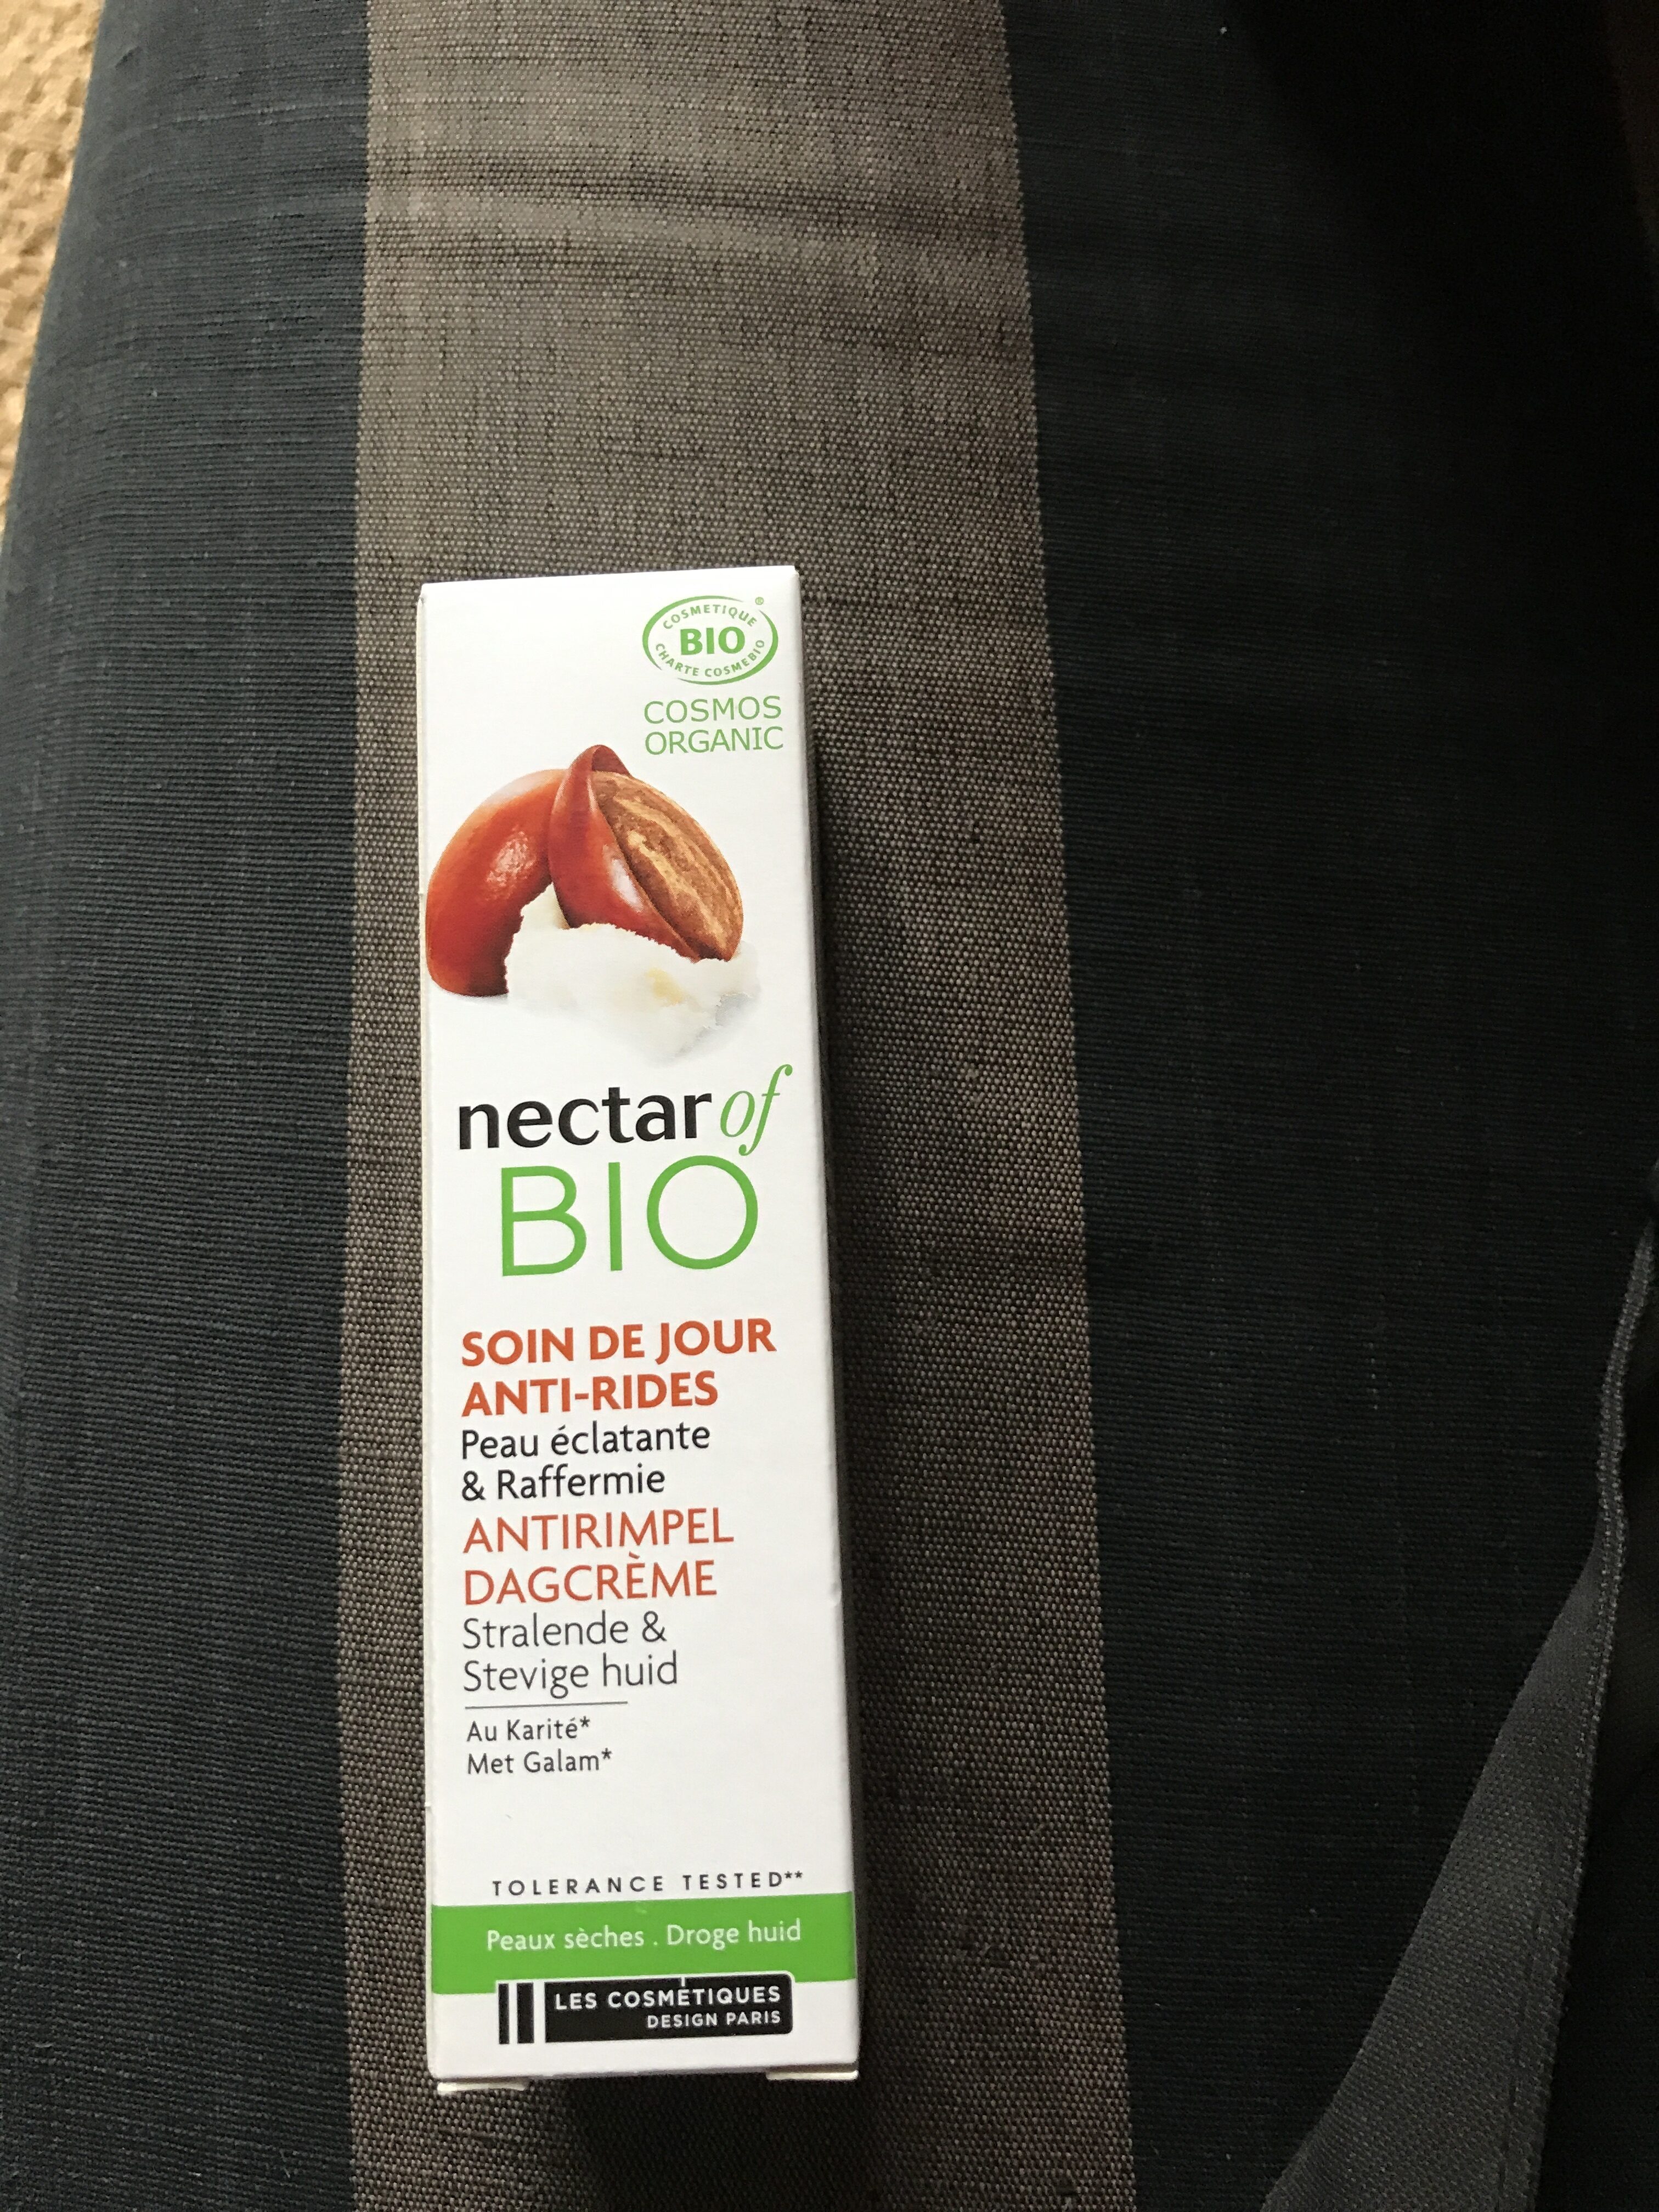 Nectar of Bio - Product - fr